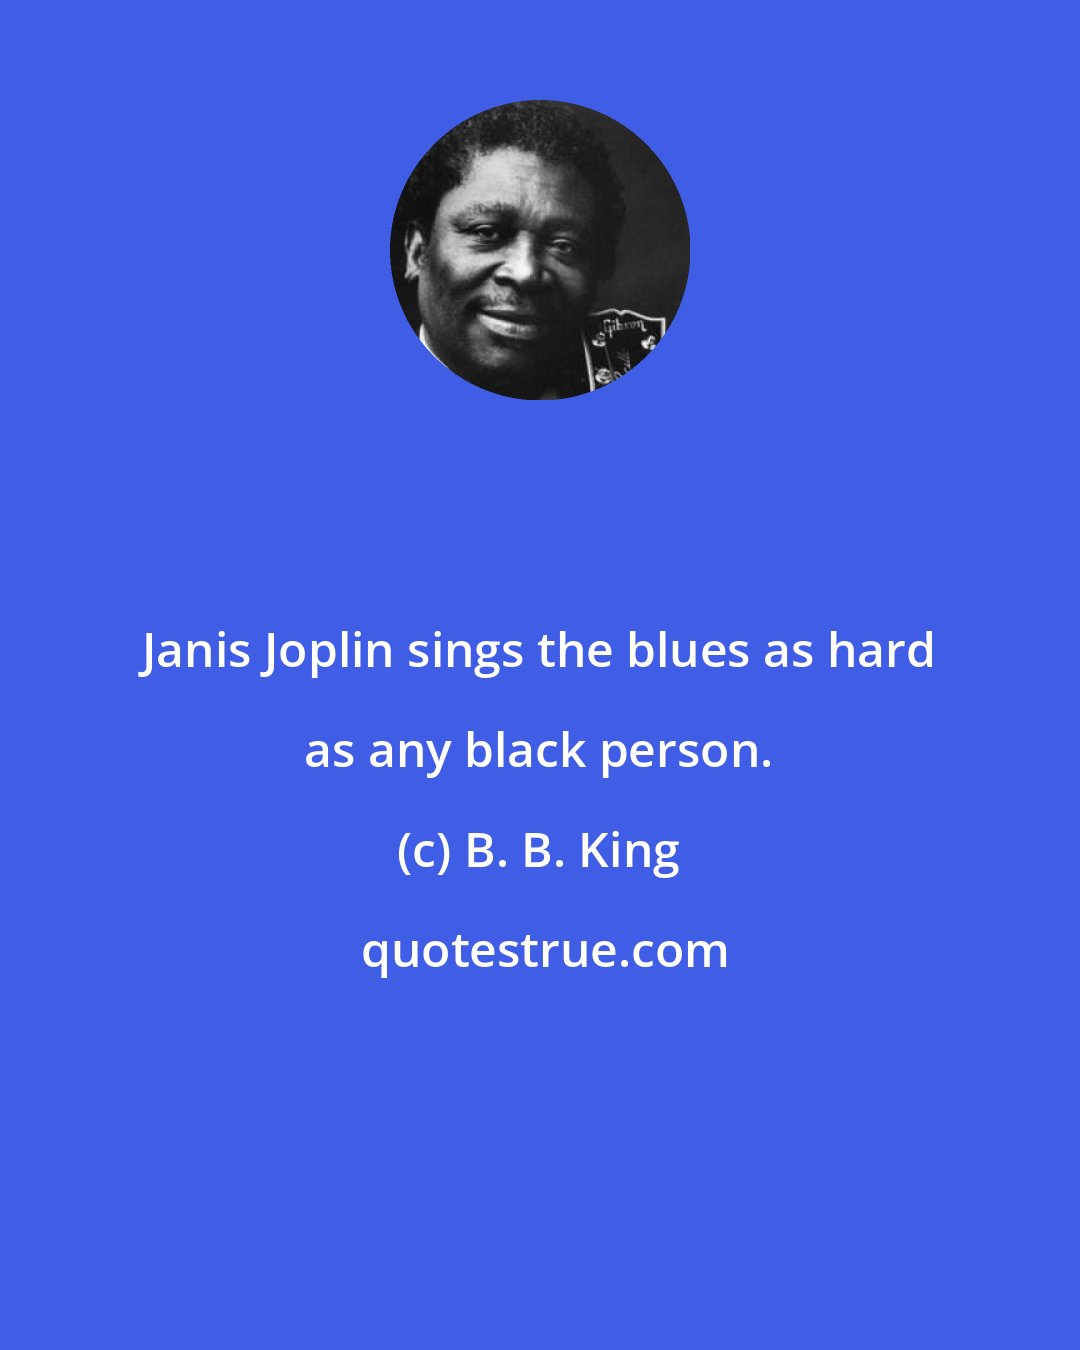 B. B. King: Janis Joplin sings the blues as hard as any black person.